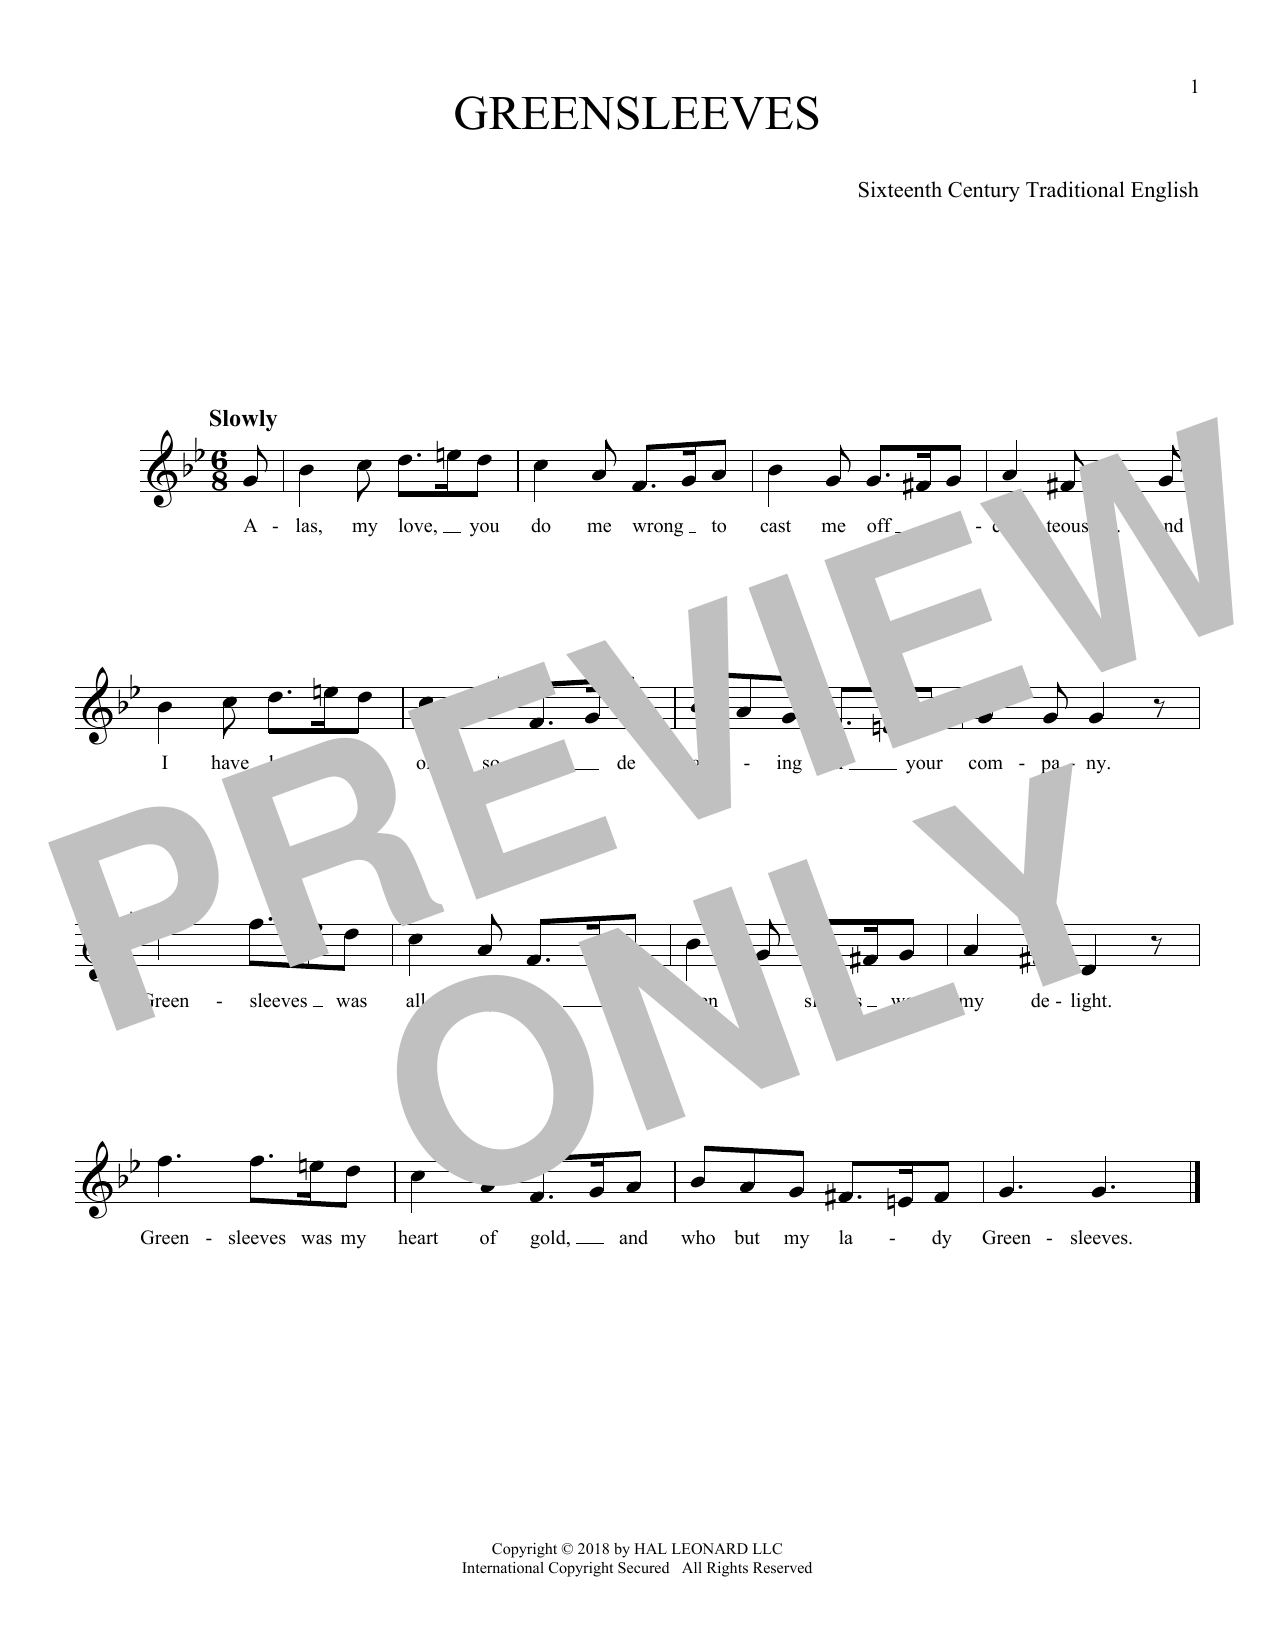 Traditional English Greensleeves Sheet Music Notes Download Printable Pdf Score 1129611